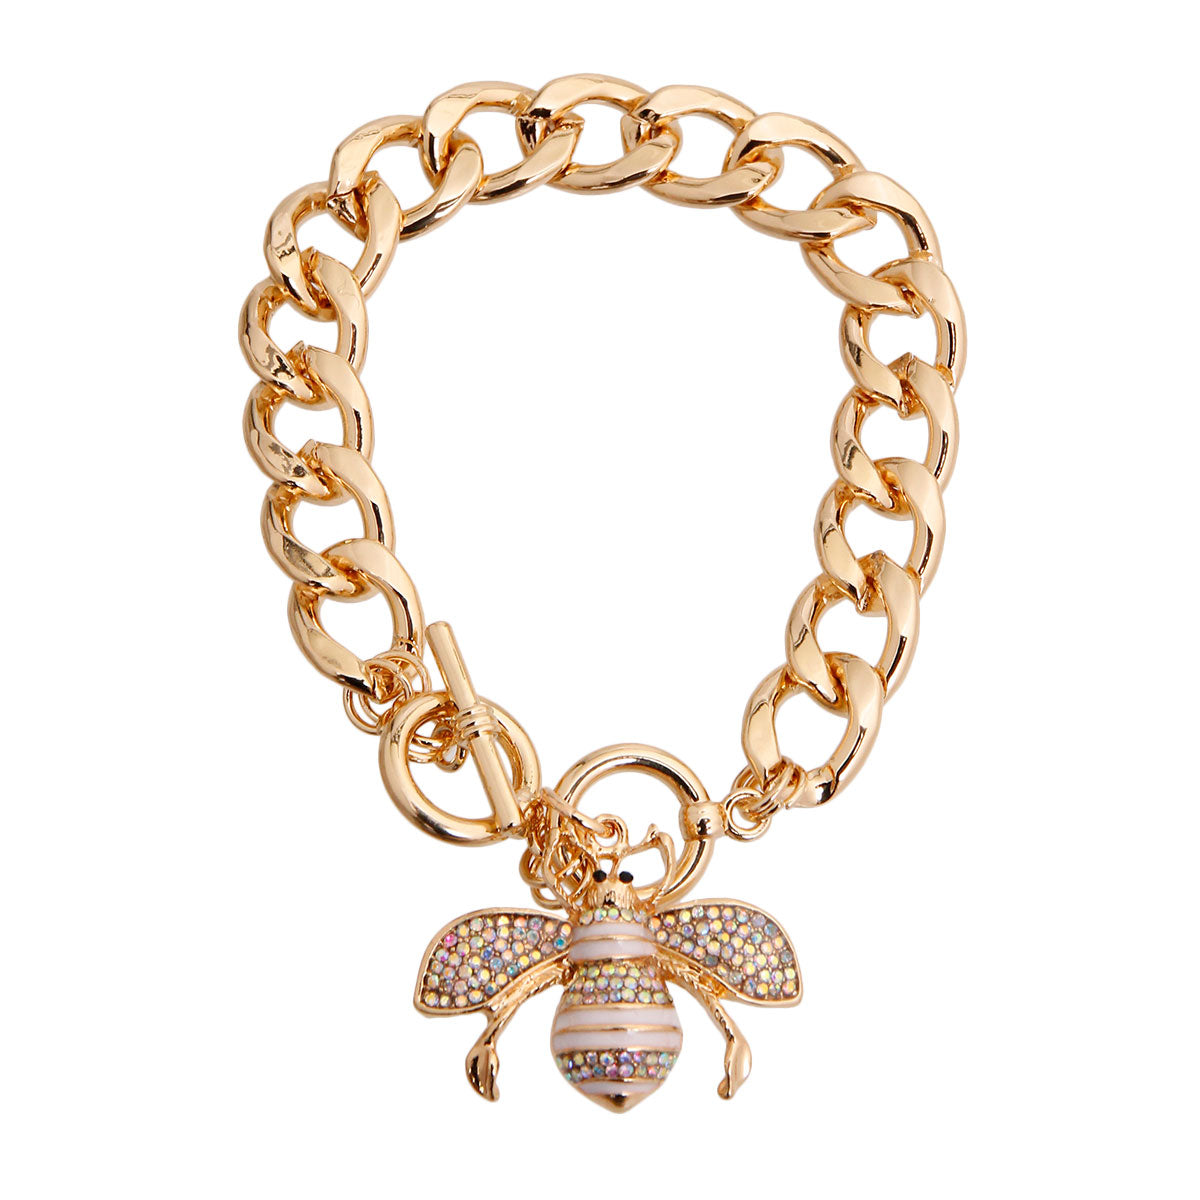 Designer Style Aurora Borealis Bee Bracelet